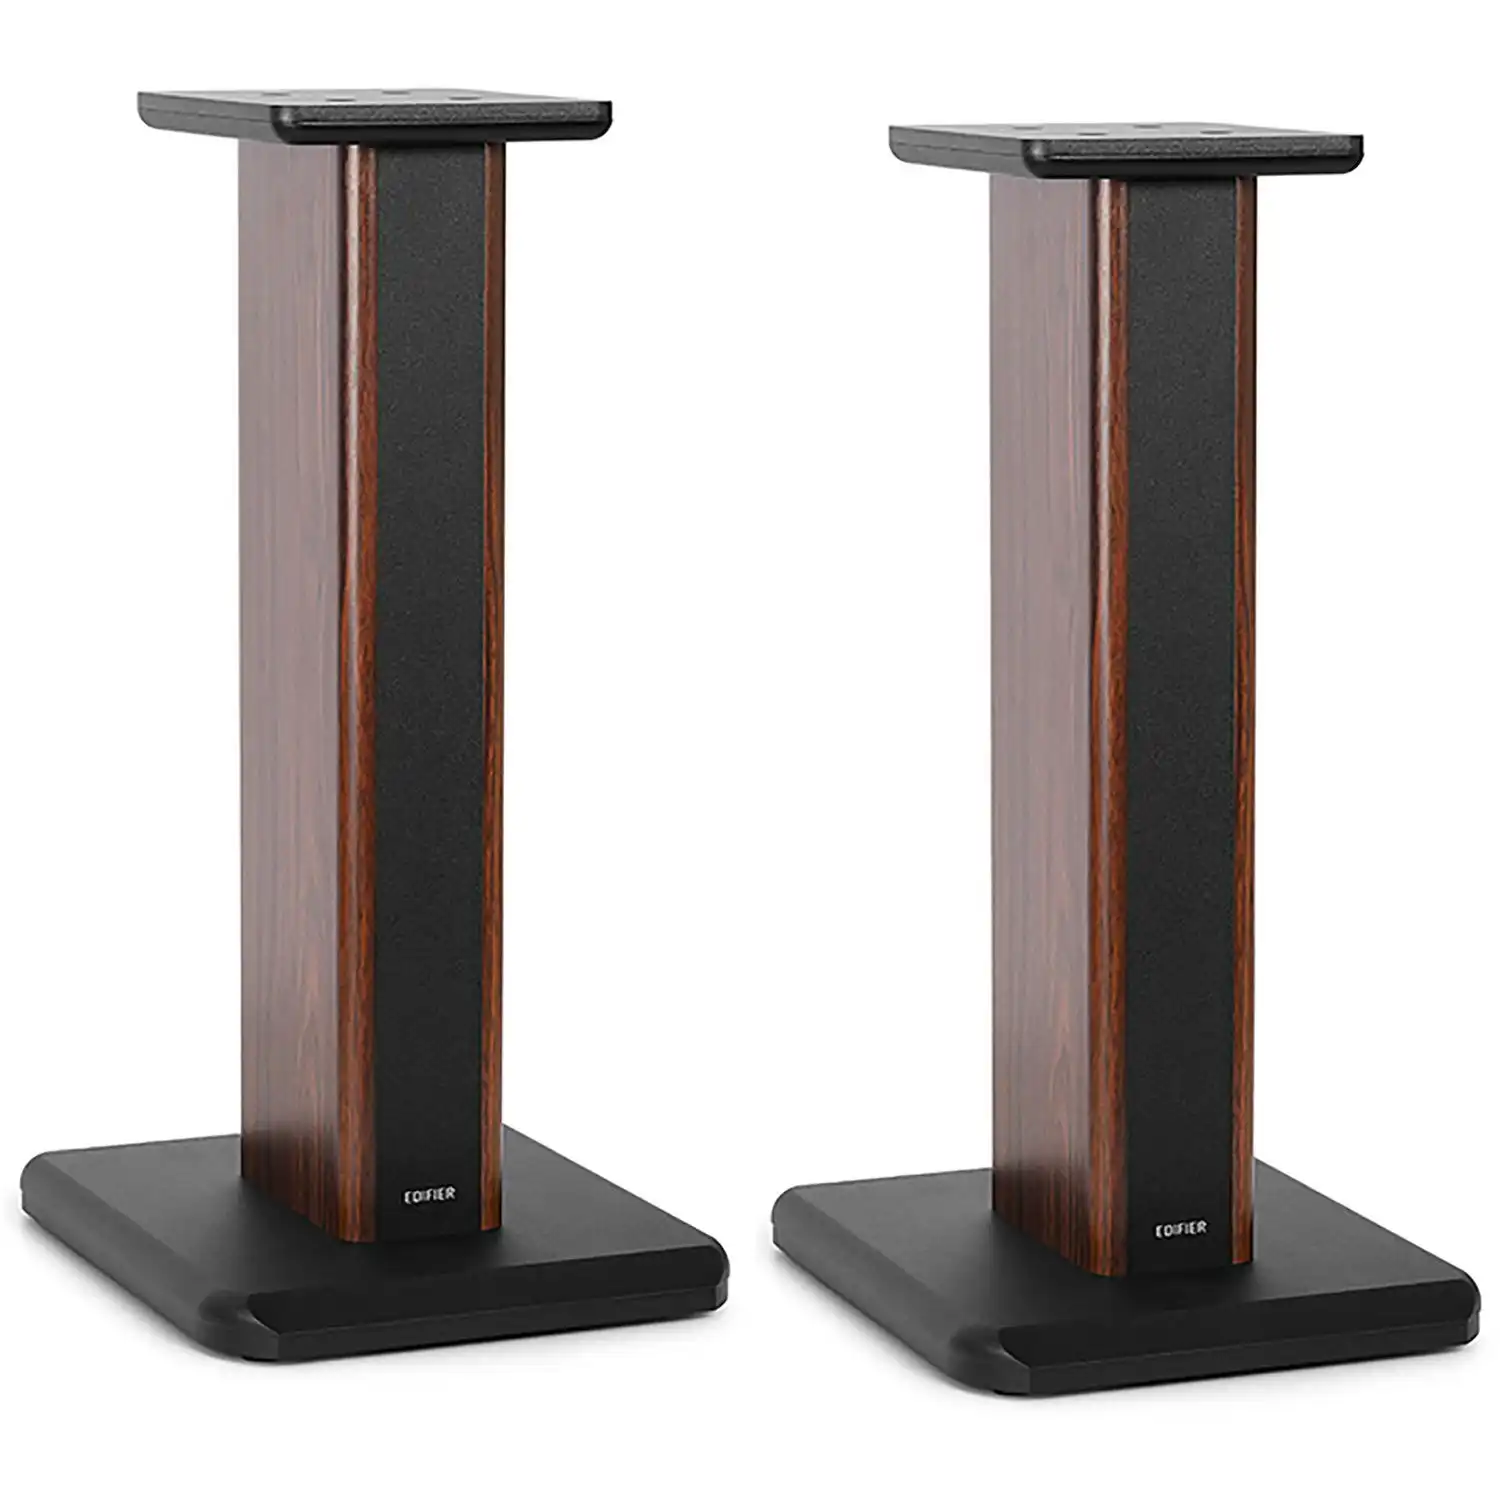 Edifier Ss03 Speaker Stand - Wood